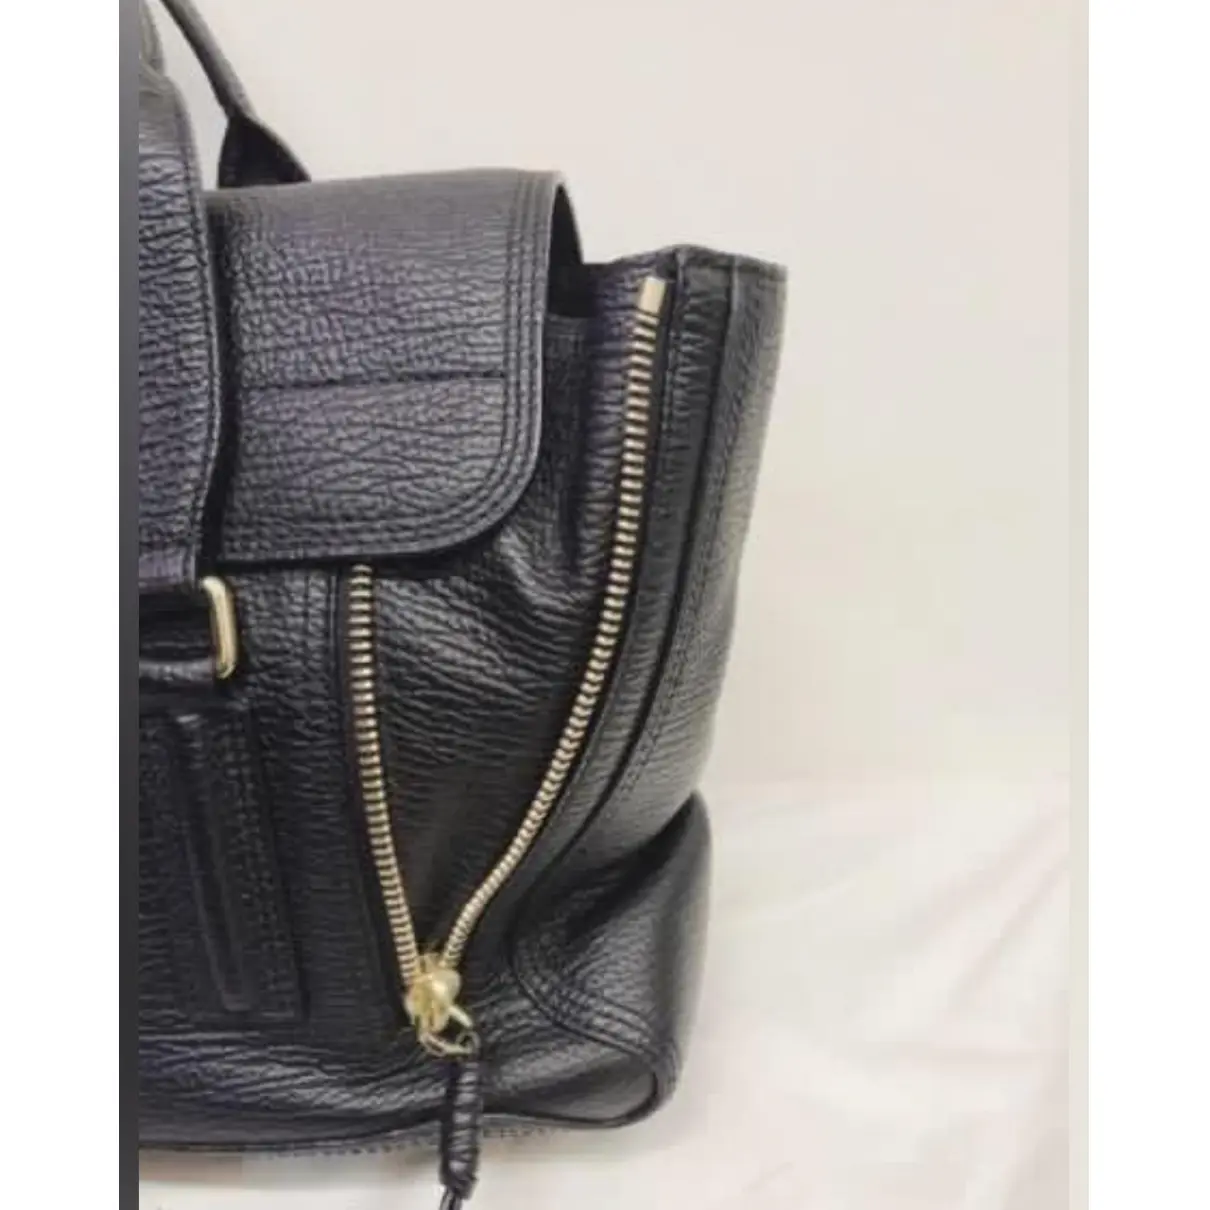 Buy 3.1 Phillip Lim Pashli leather bag online